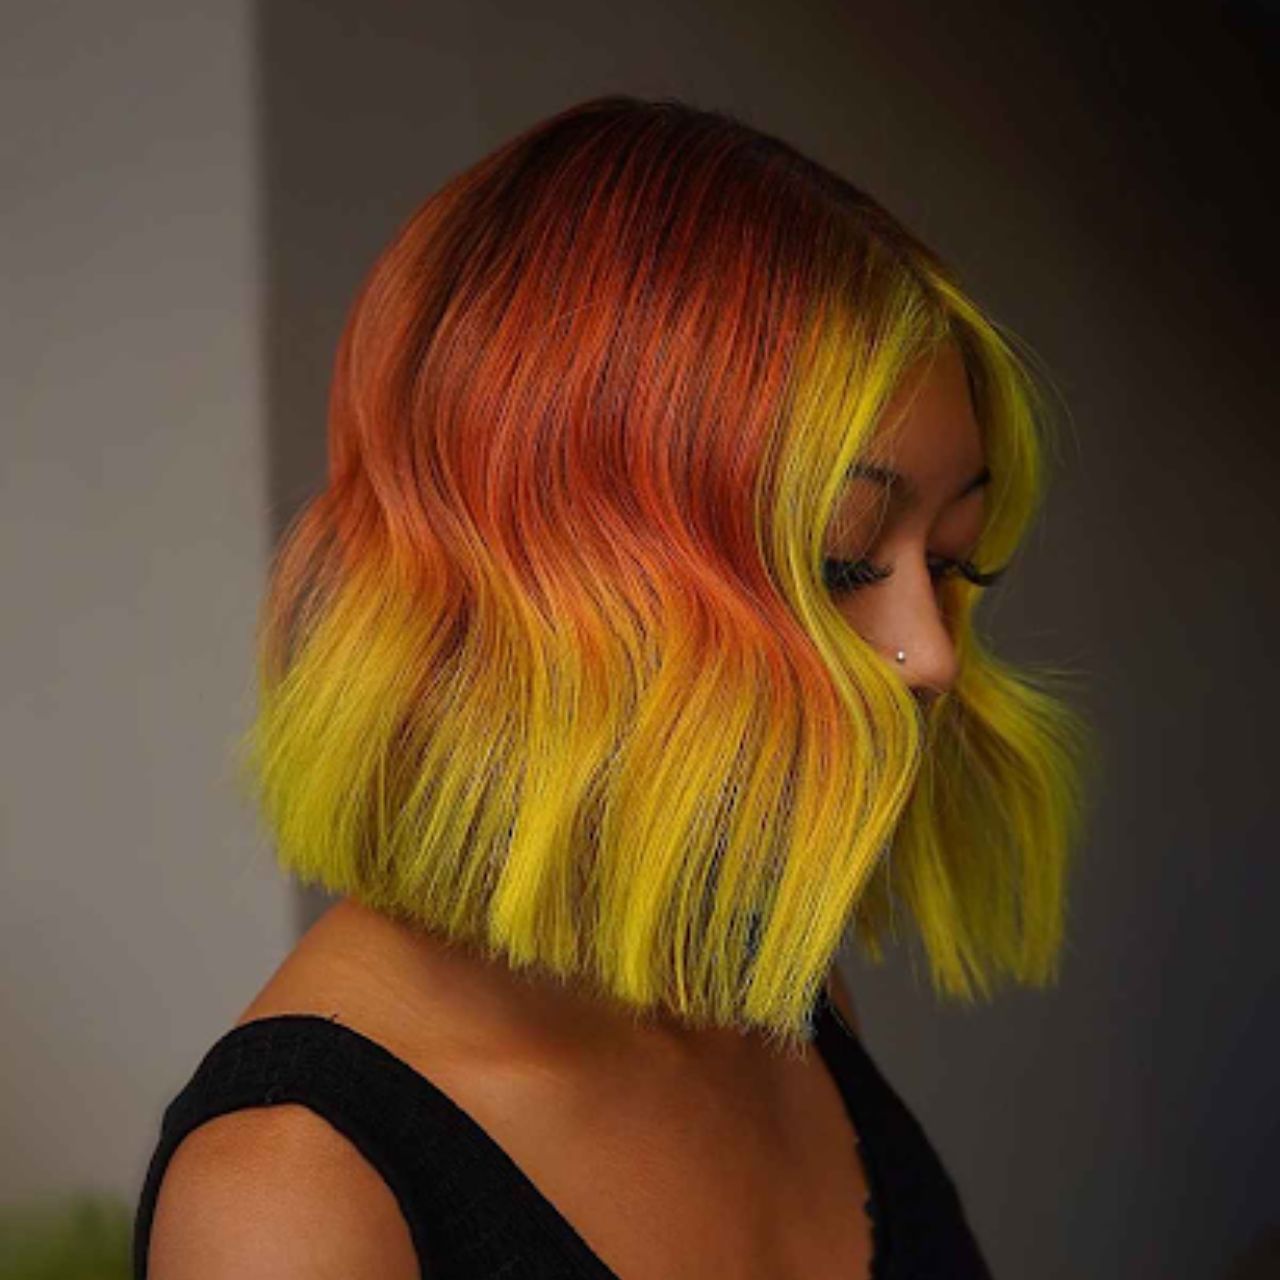 Burnt orange and yellow hairstyle